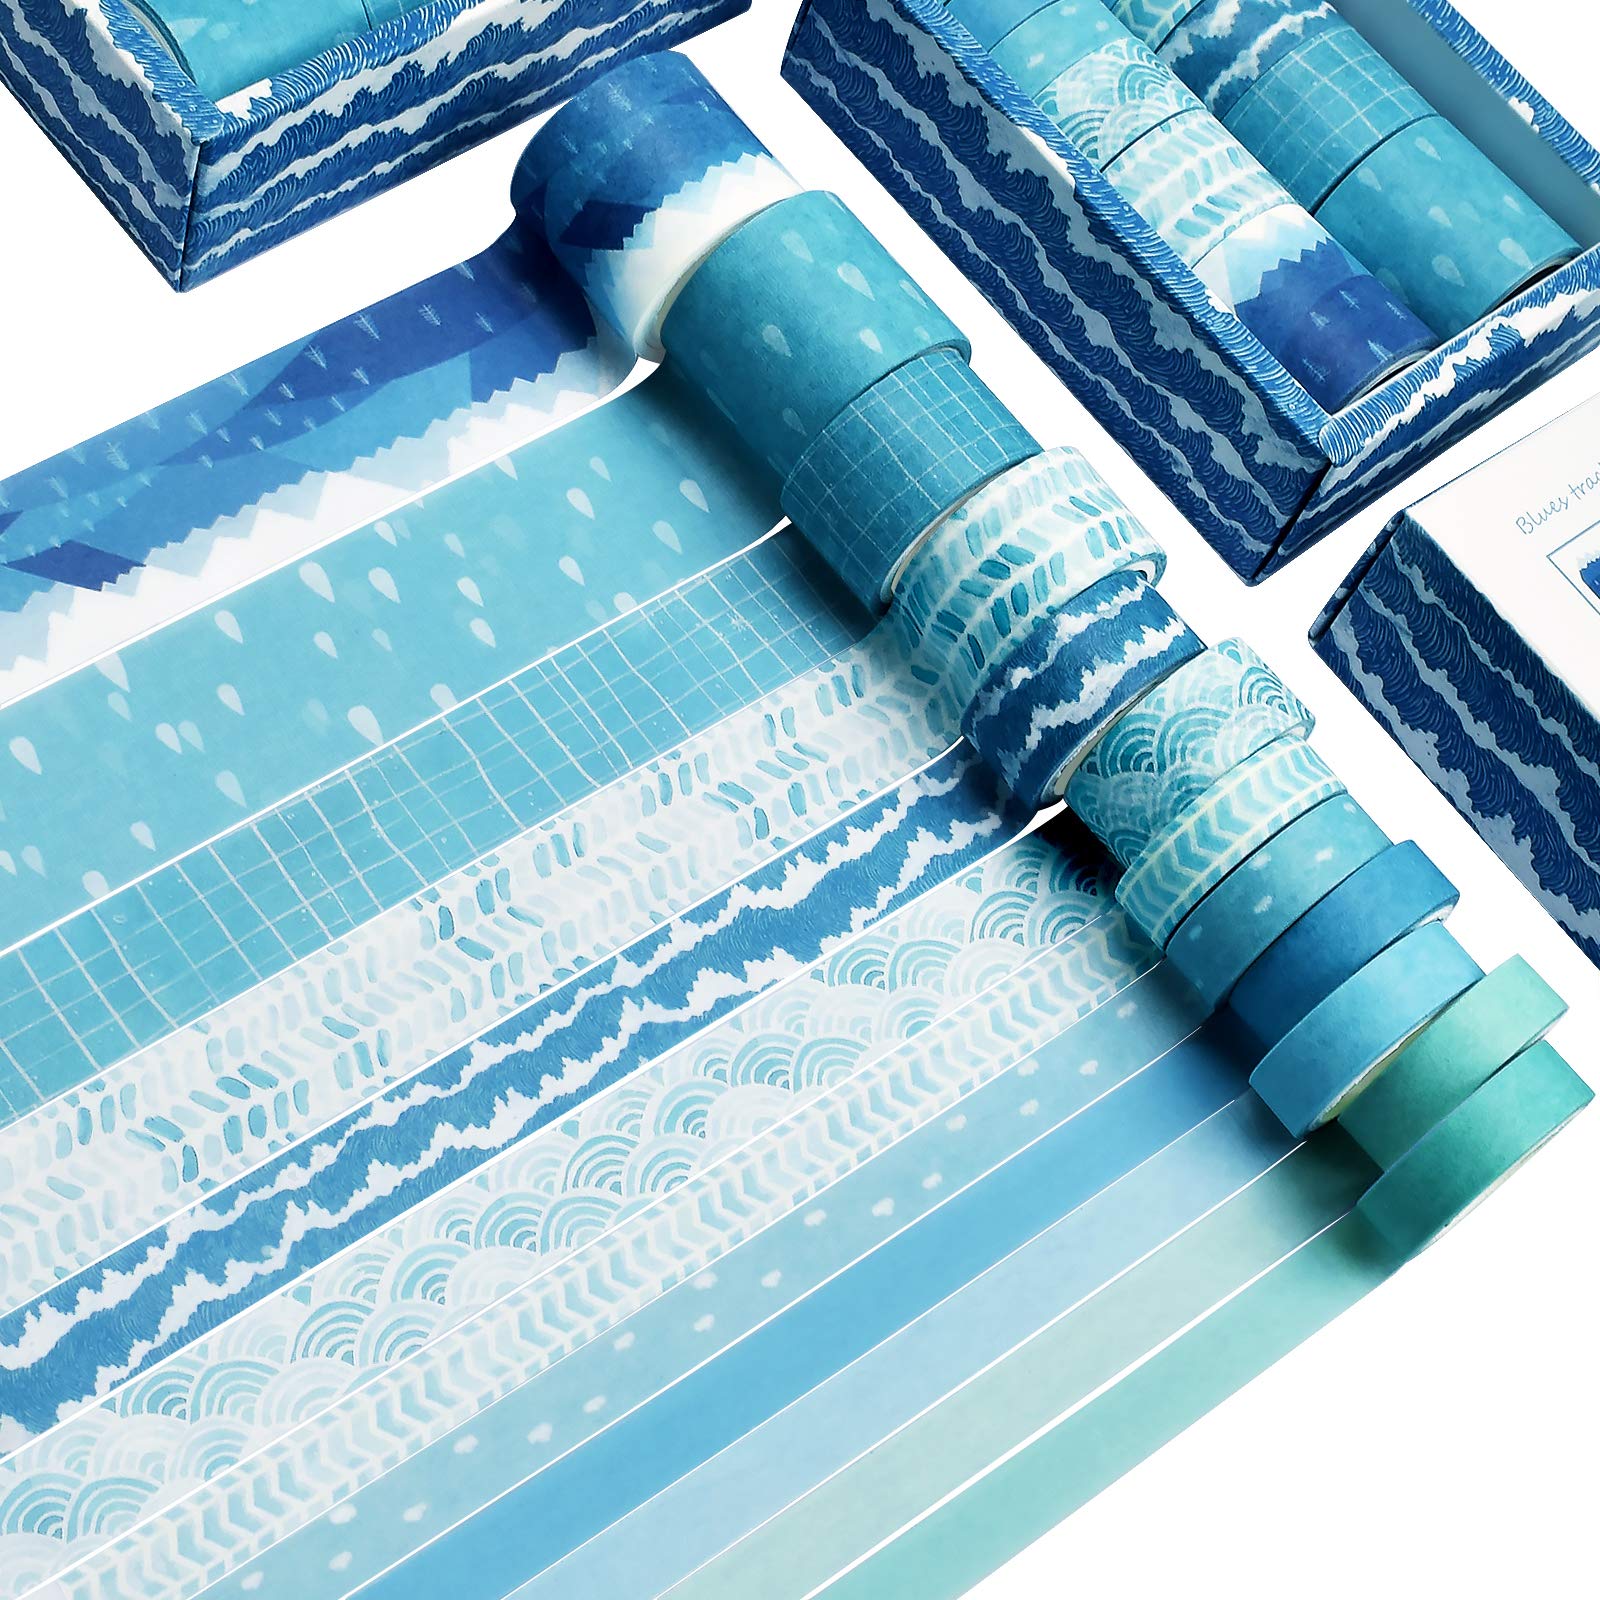 DAPUTOU Washi Tape Set of 12 Rolls,Blue Sea Wave Decorative Washi Masking  Tape Sets for Craft,Kids,Scrapbook,DIY,Gift Wrapping